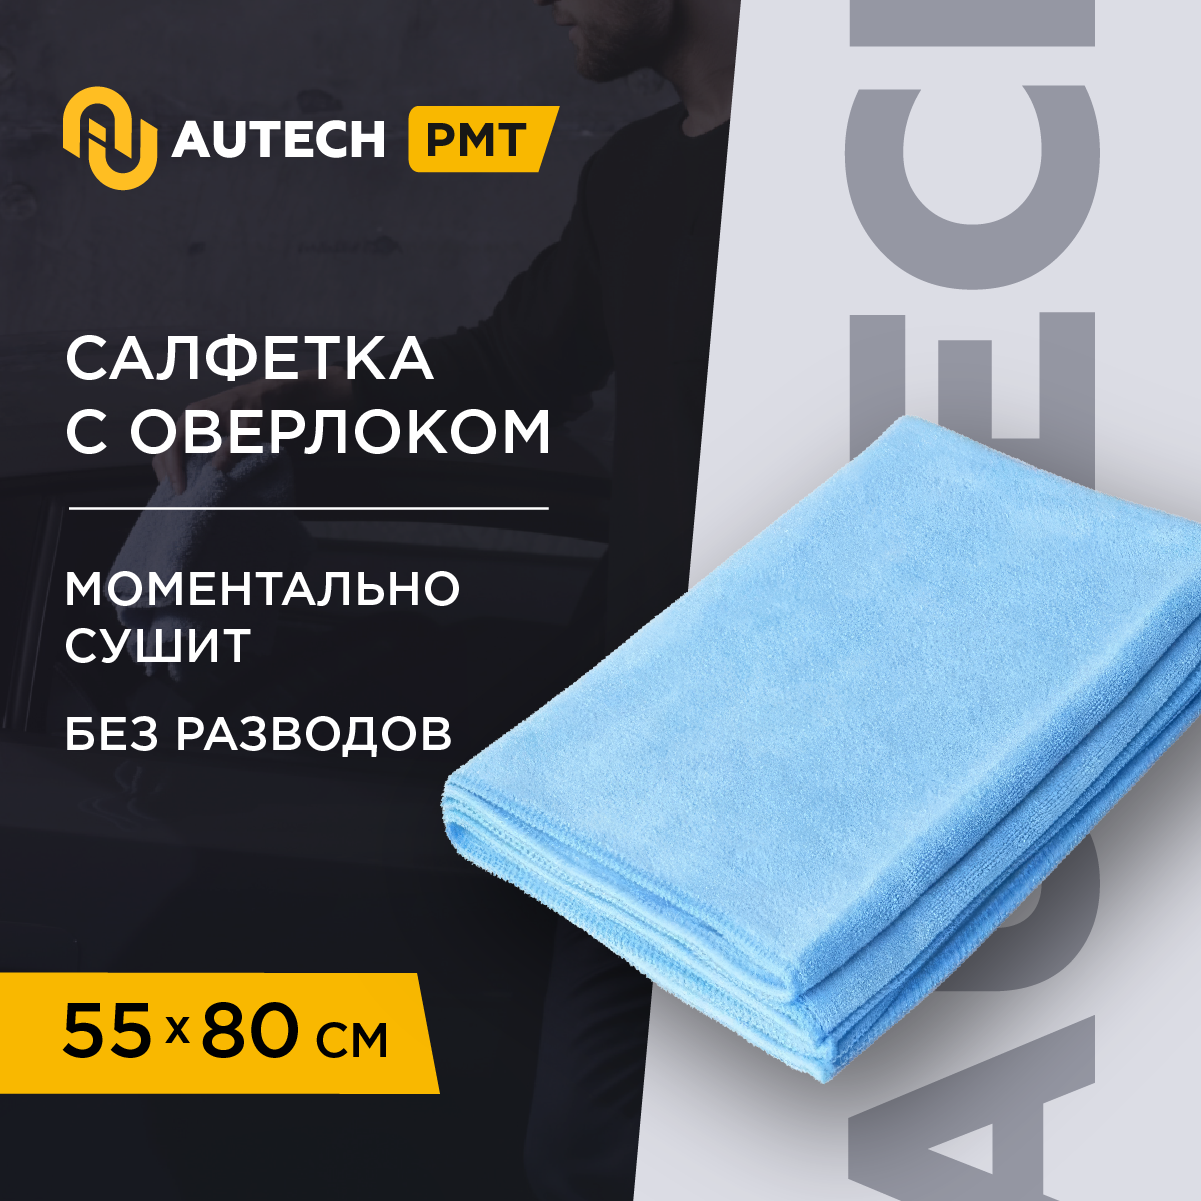 AuTech | PROFI-MICROFASERTUCH Полотенце оверлоченное 55*80 см голубое 400гр/м2 для сушки авто